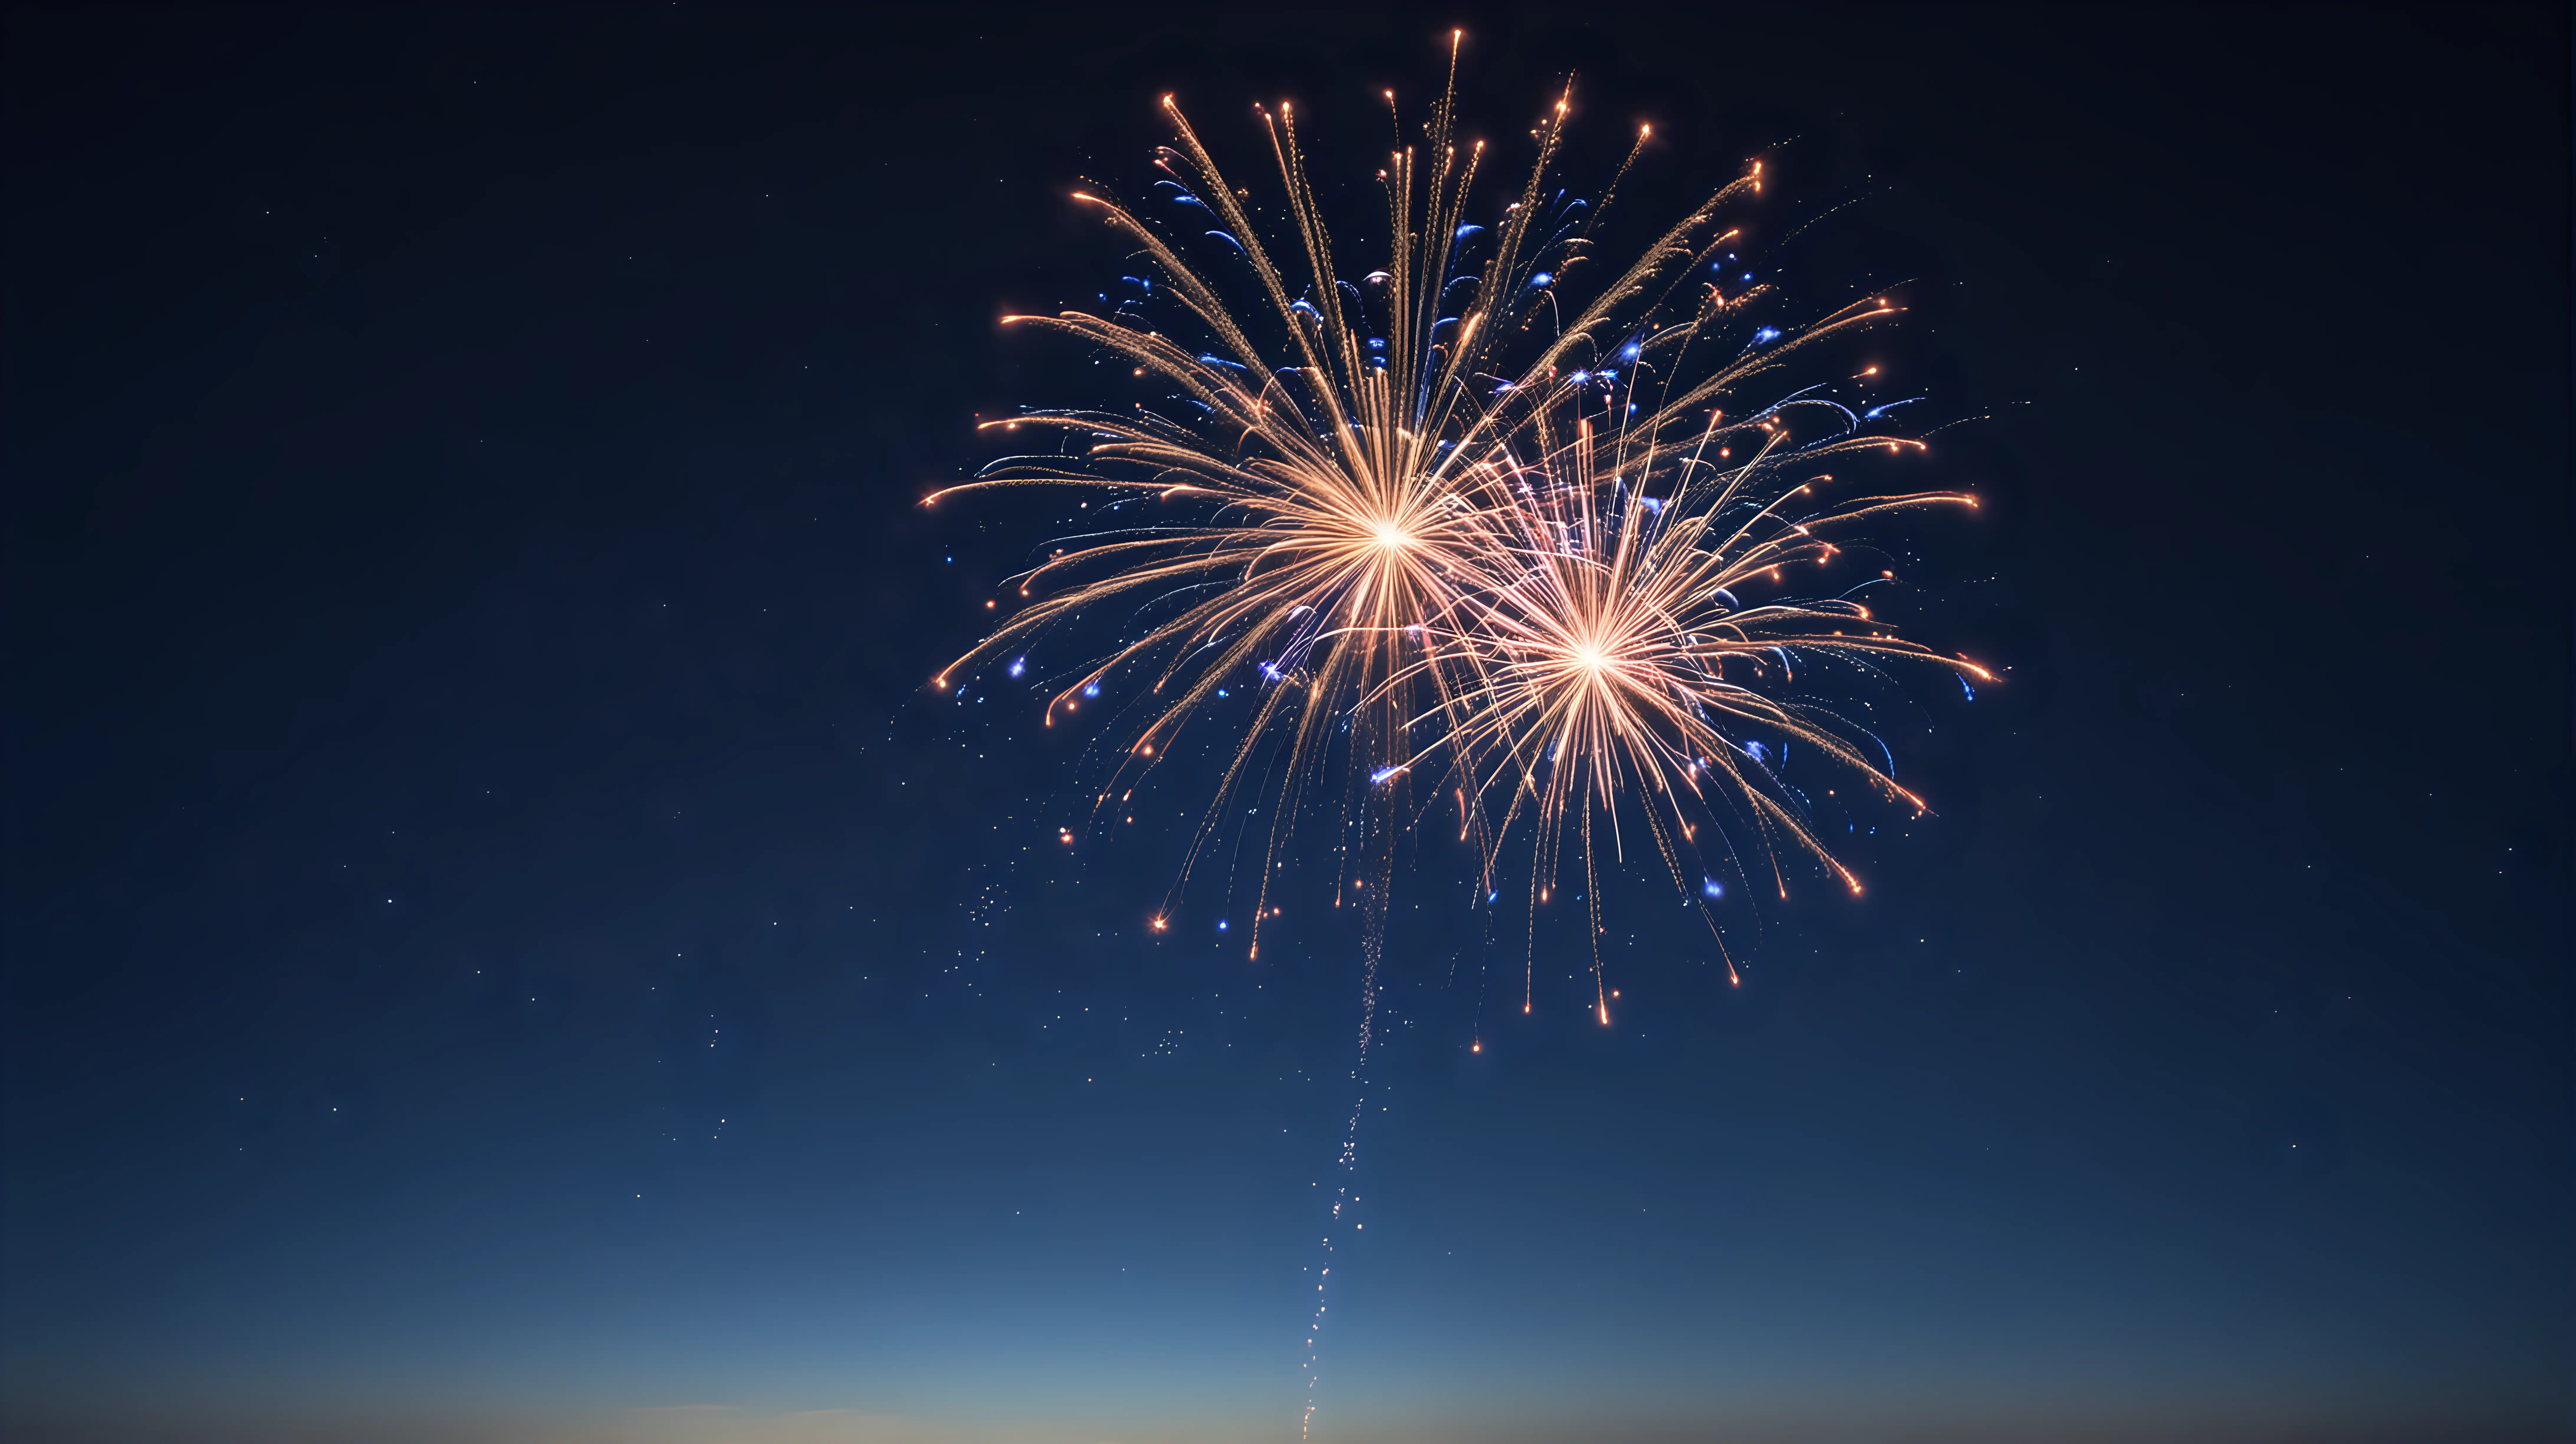 Vibrant Small Glowing Fireworks Display Against Dark Blue Sky